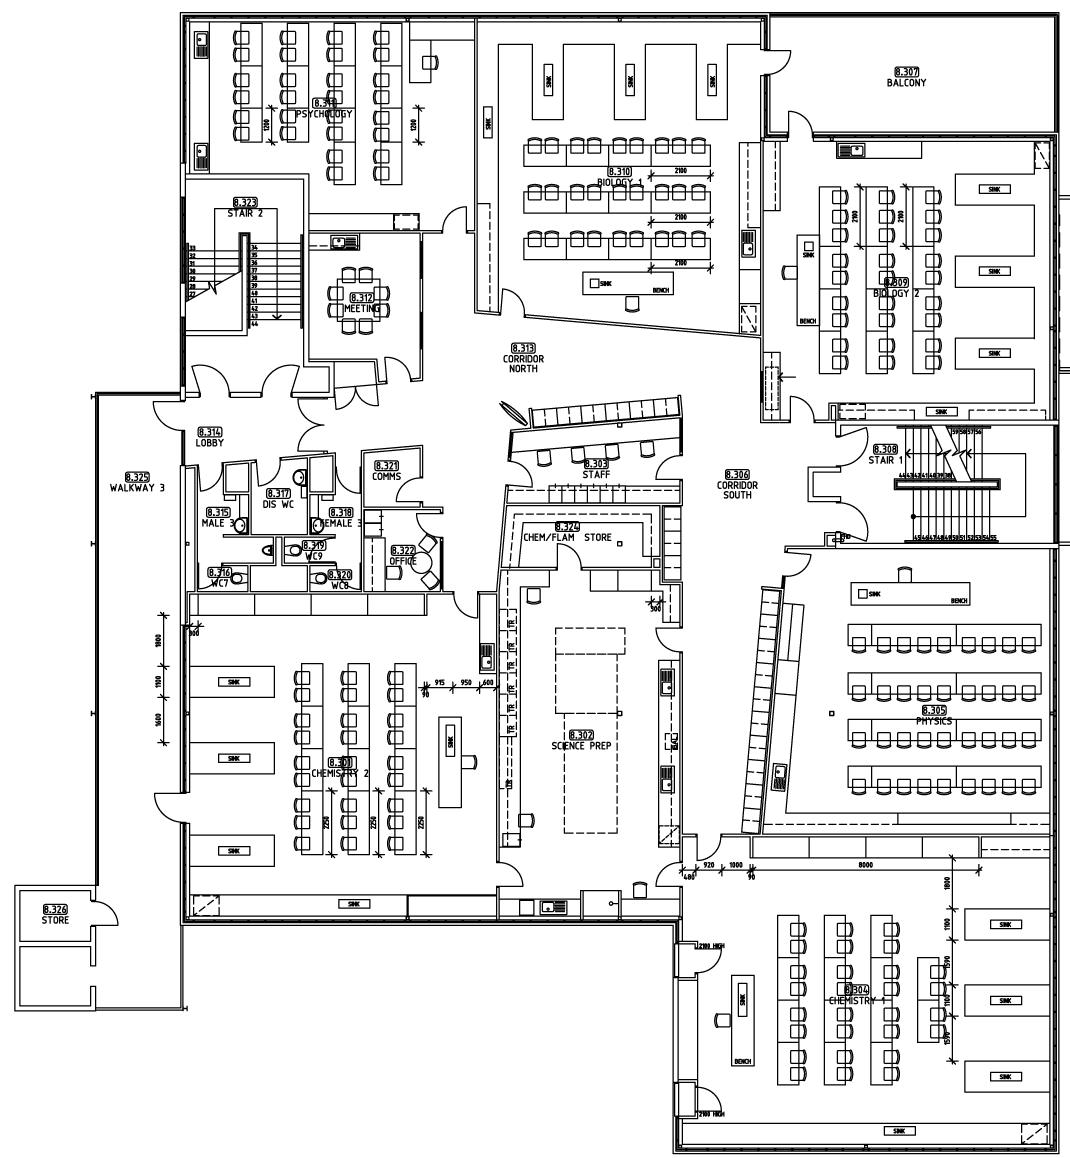 Floor Plan with Furniture